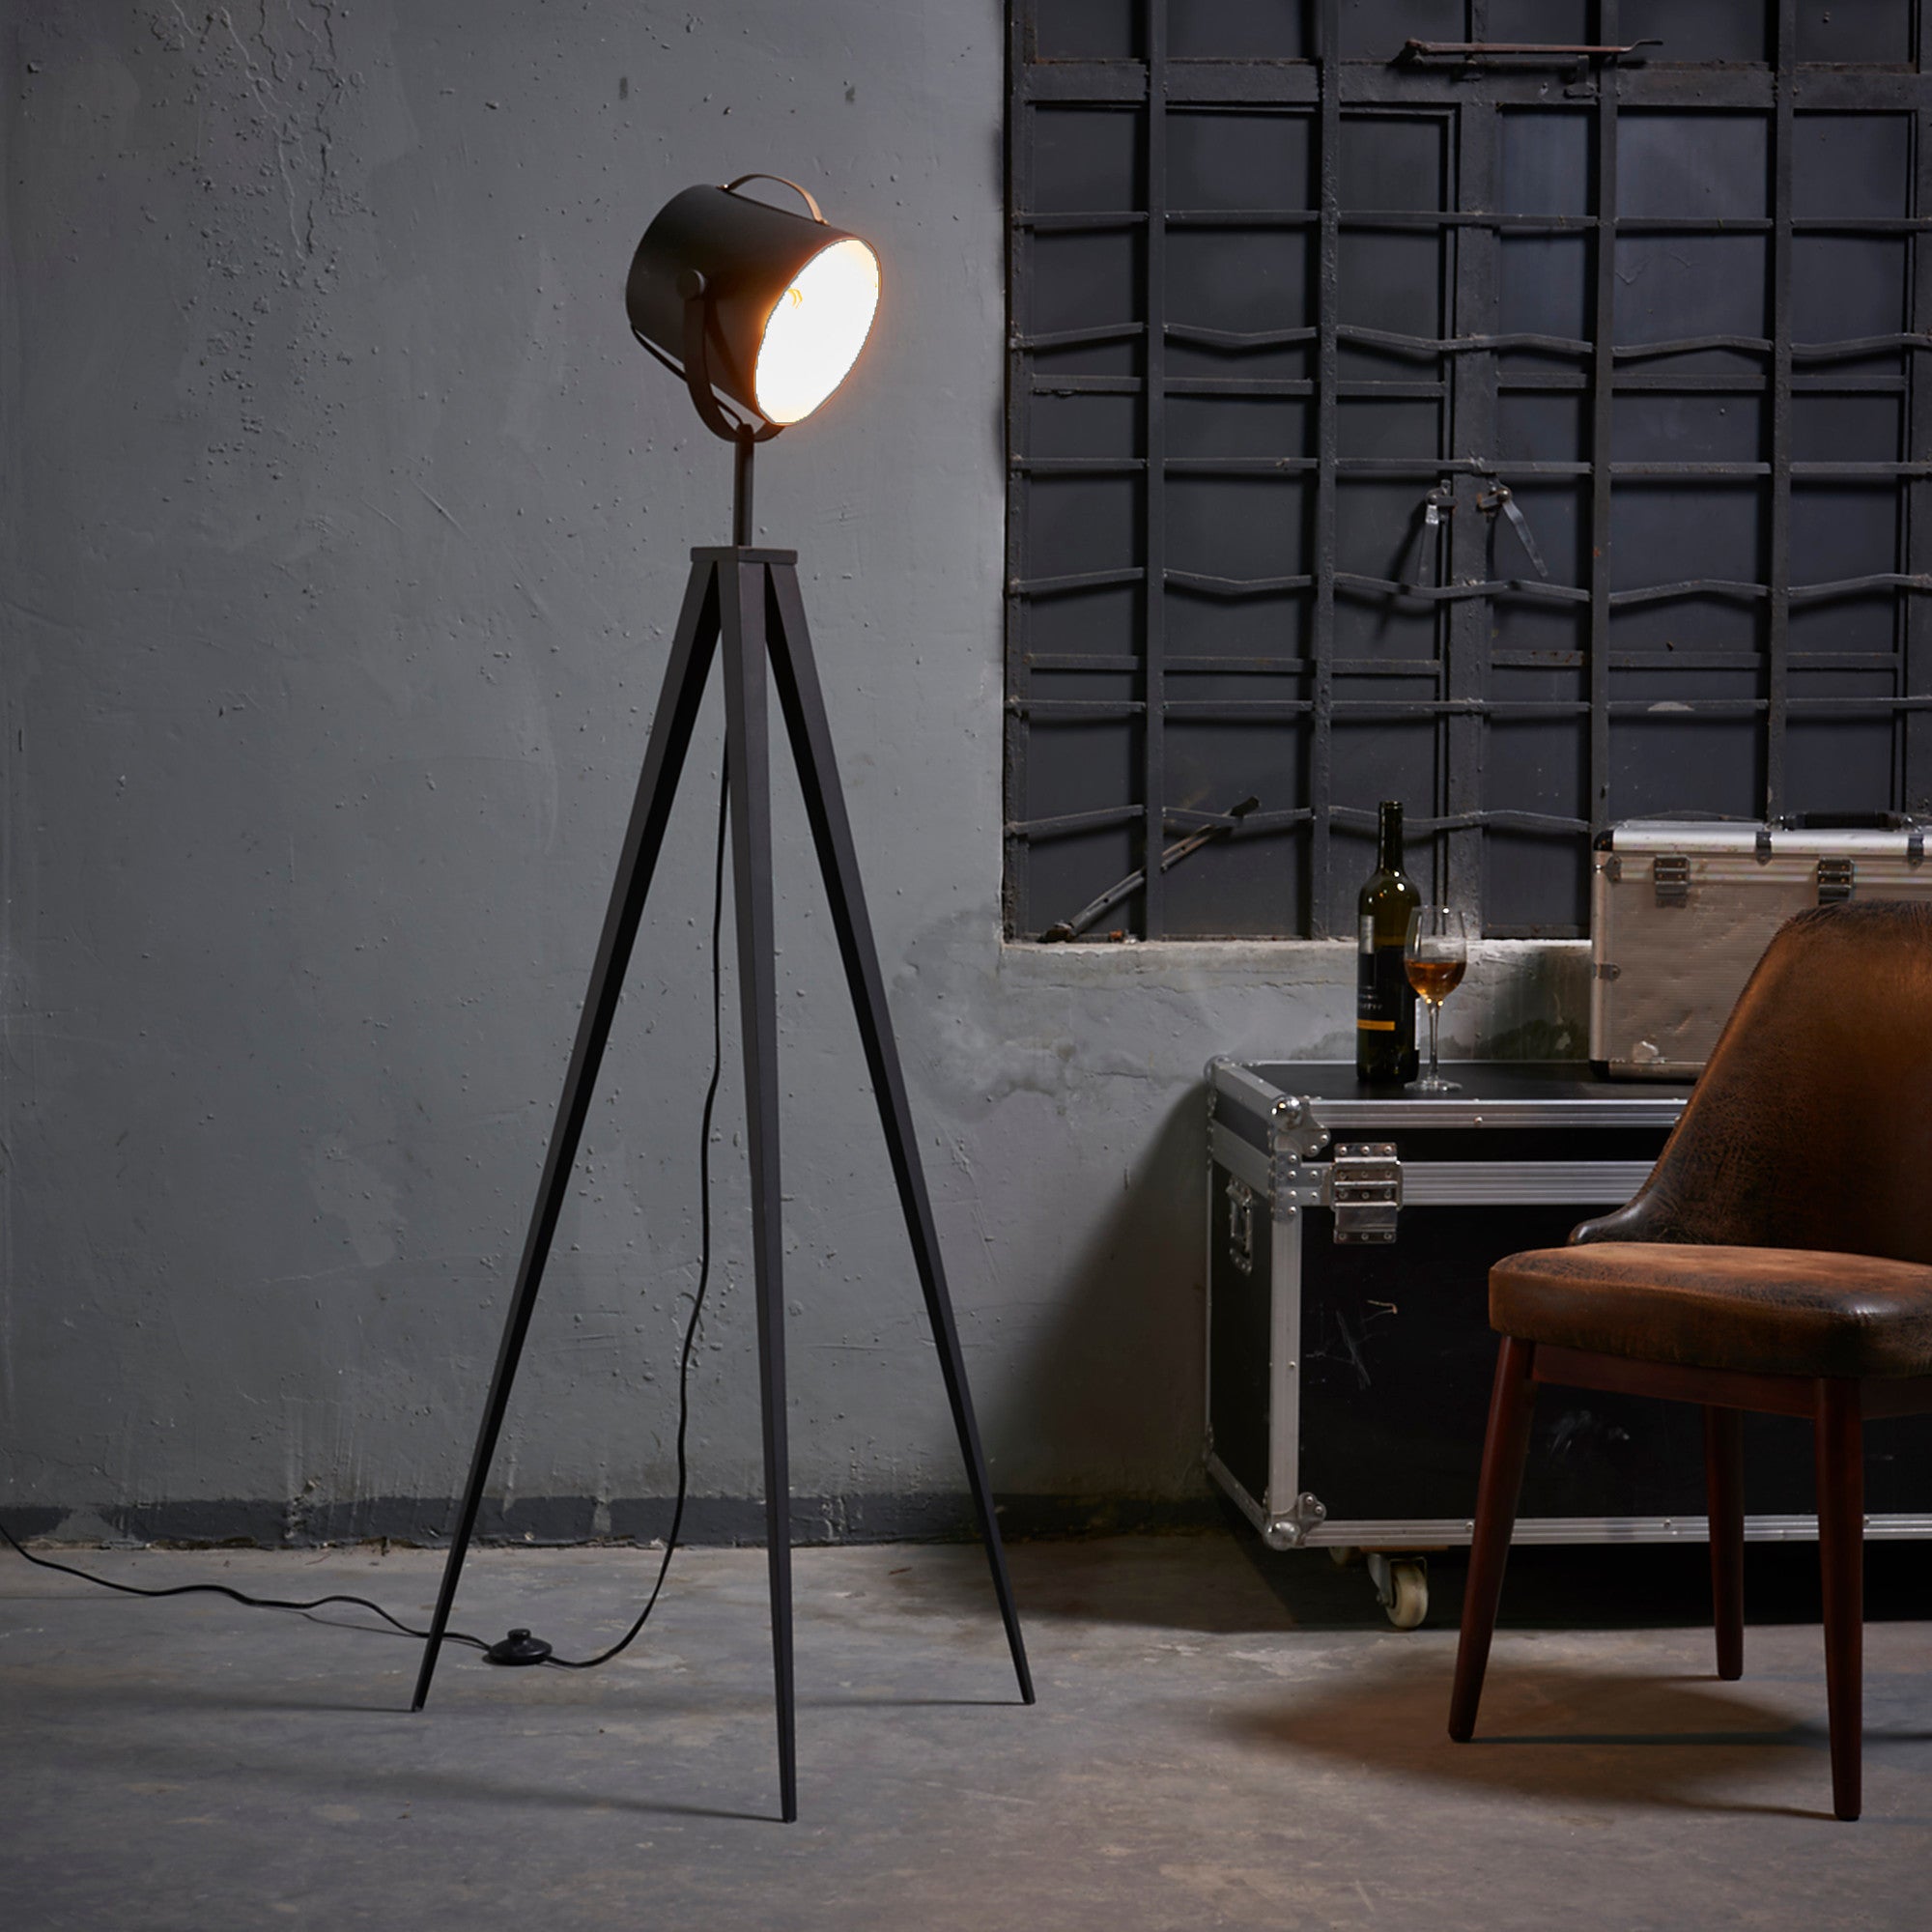 Teamson Home Artiste 62" Modern Tripod Floor Lamp with Adjustable Head, Black/Gold